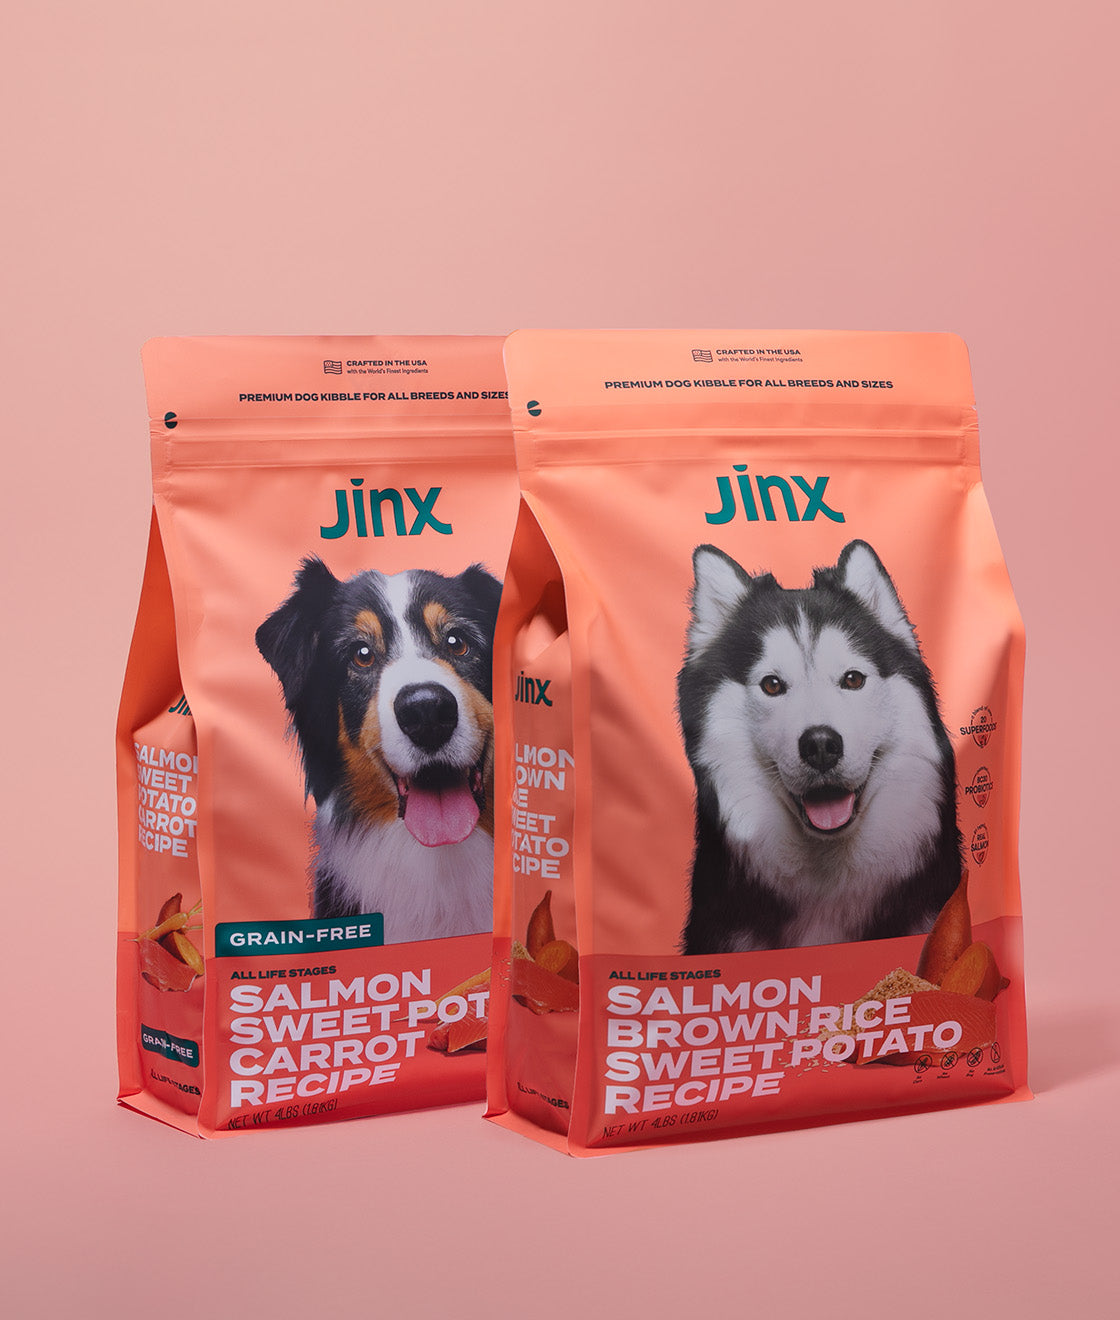 Salmon Jinx kibble sampler with salmon, sweet potato & carrot product packaging and salmon, brown rice & sweet potato product packaging. 